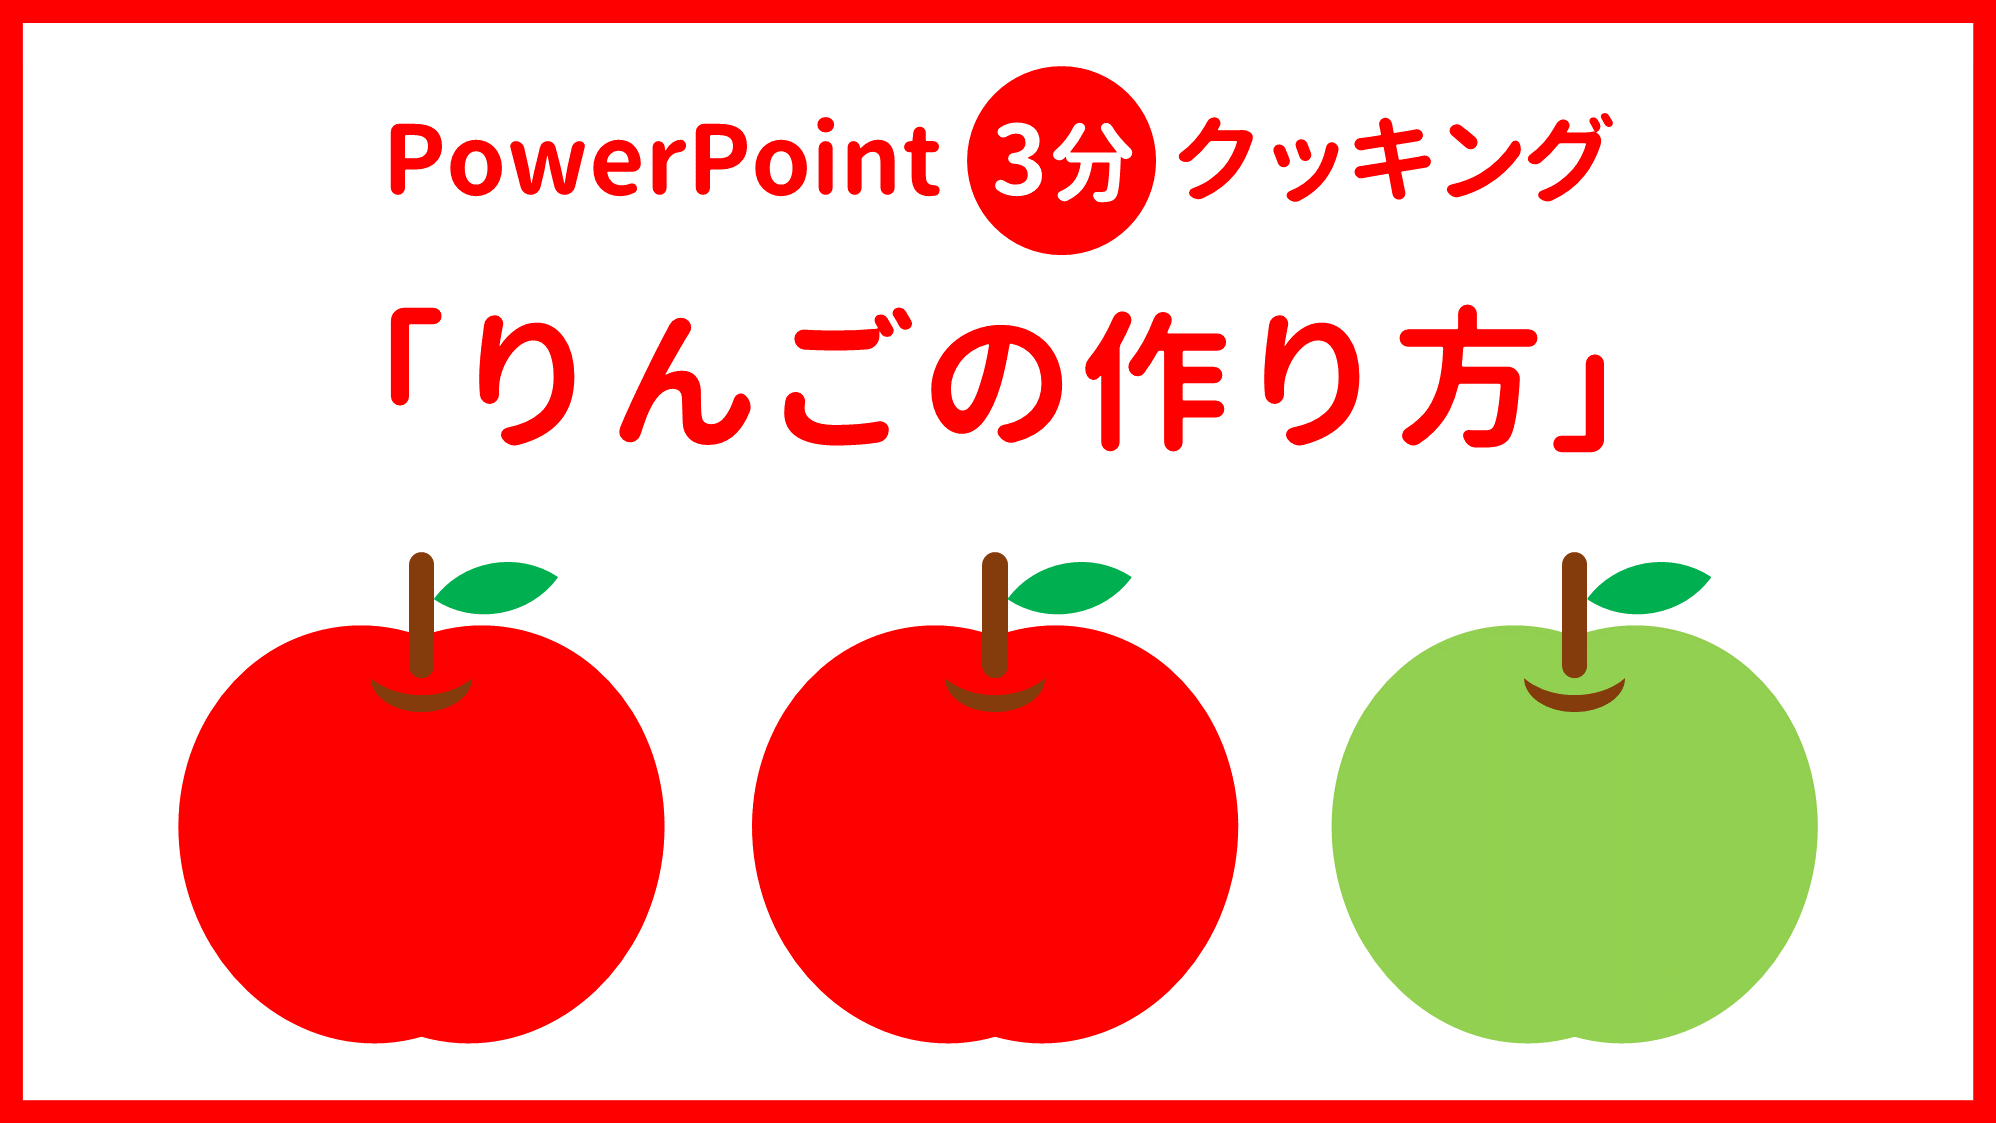 Powerpointで楽々簡単 りんごの作り方 3分クッキング Ppdtp